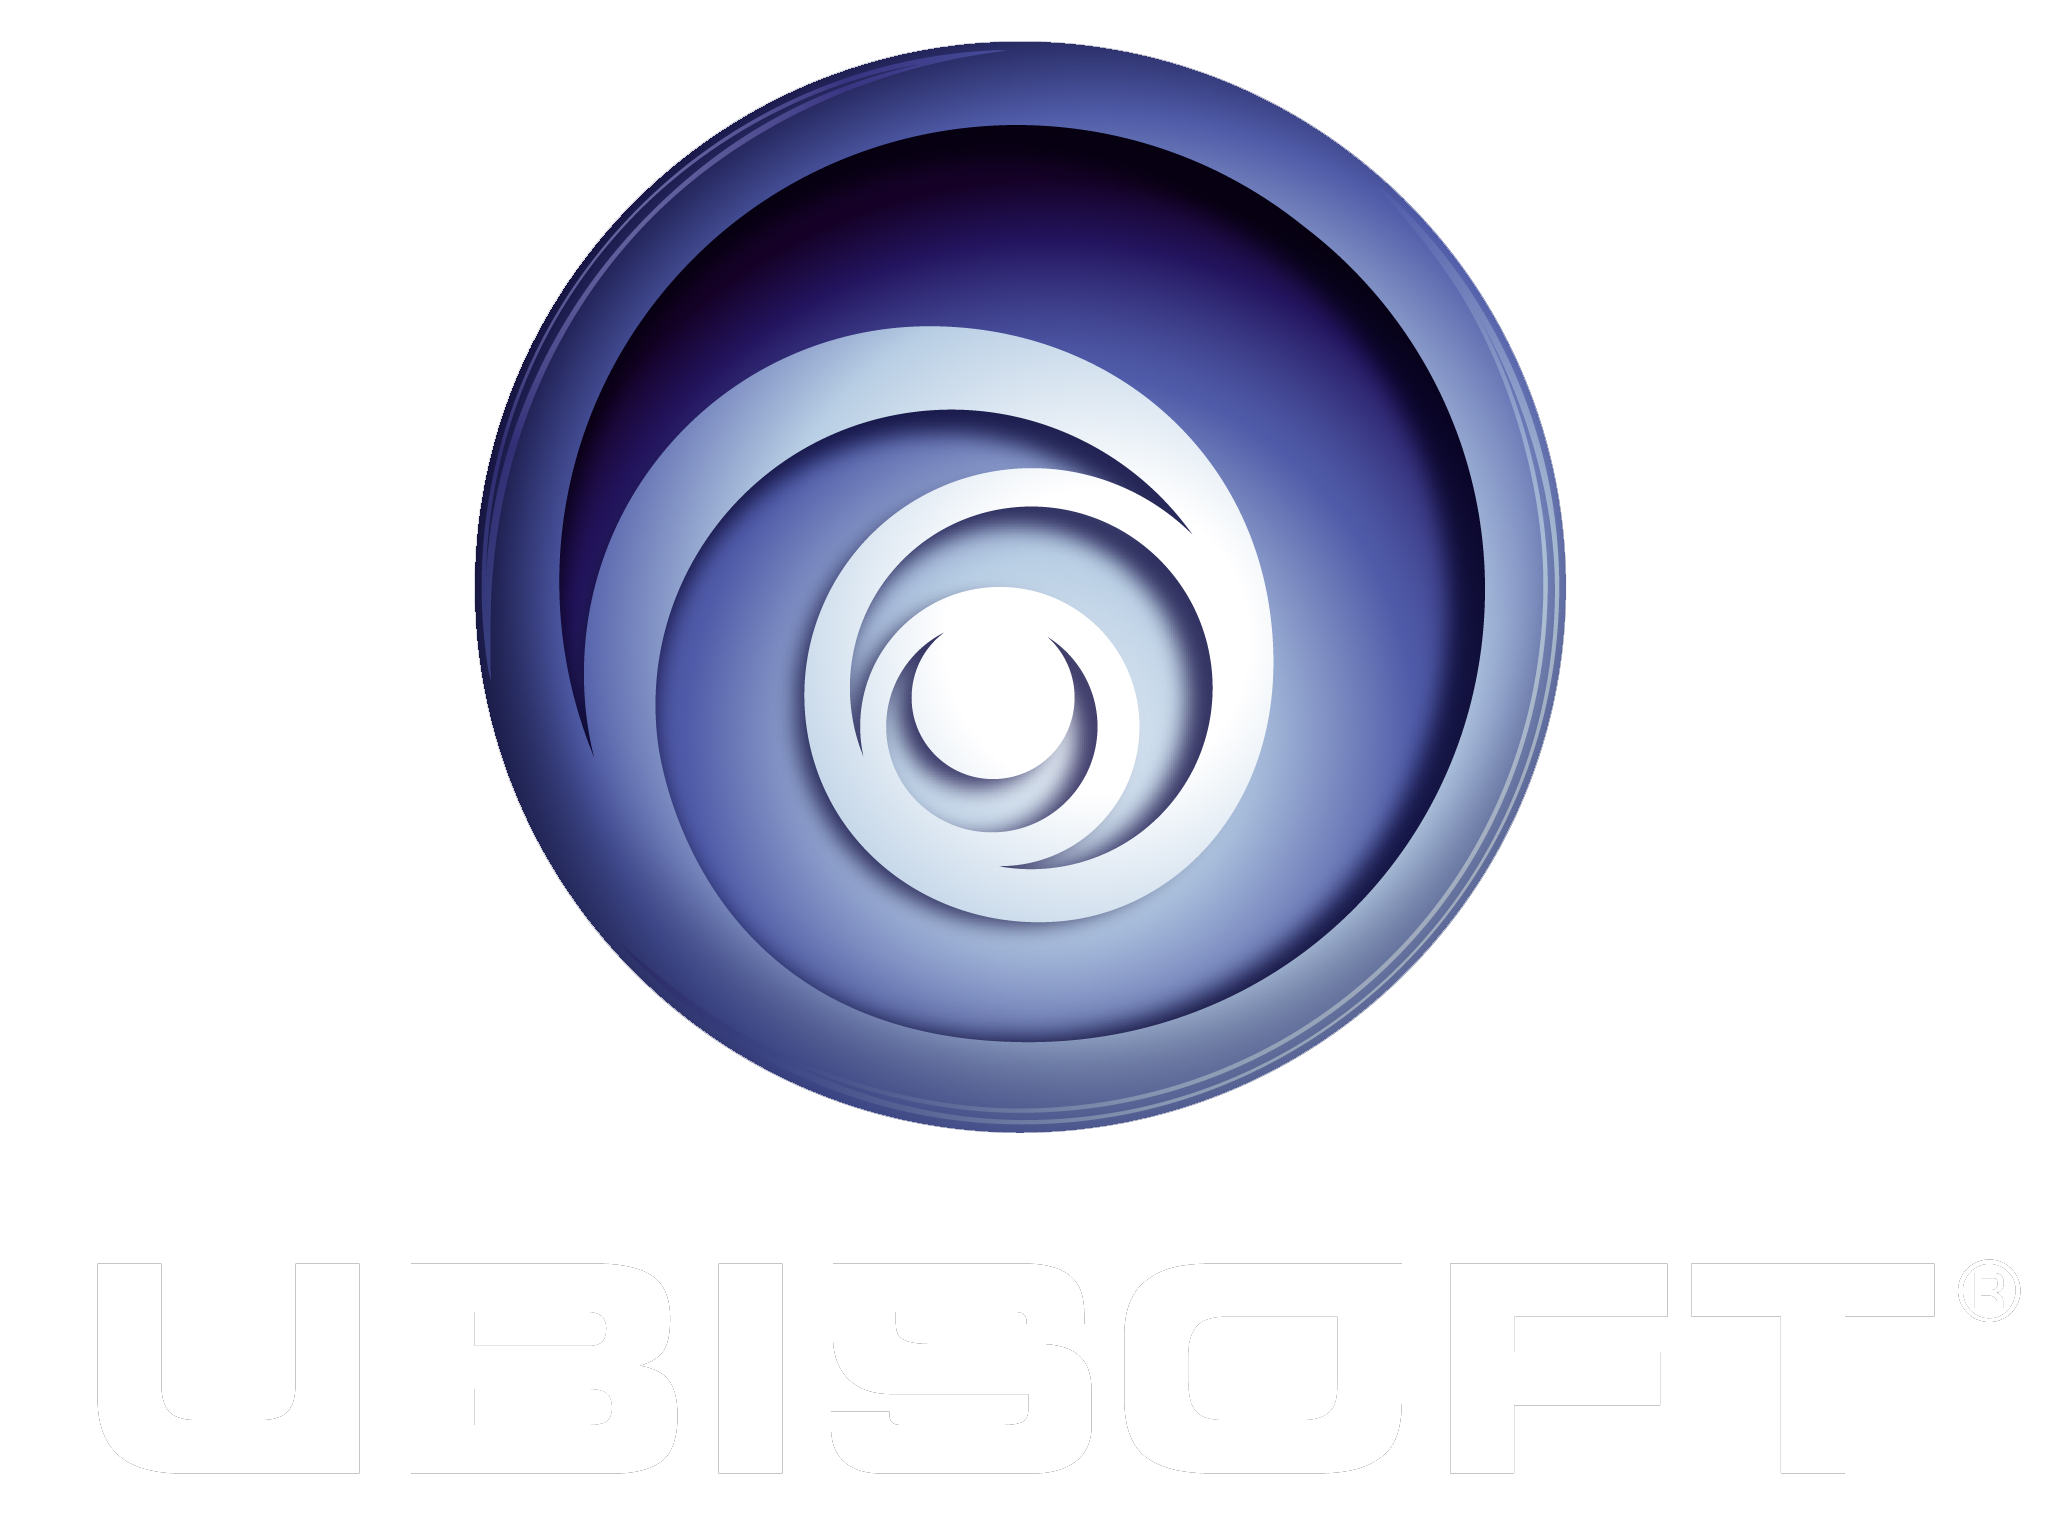 Picture for manufacturer Ubisoft